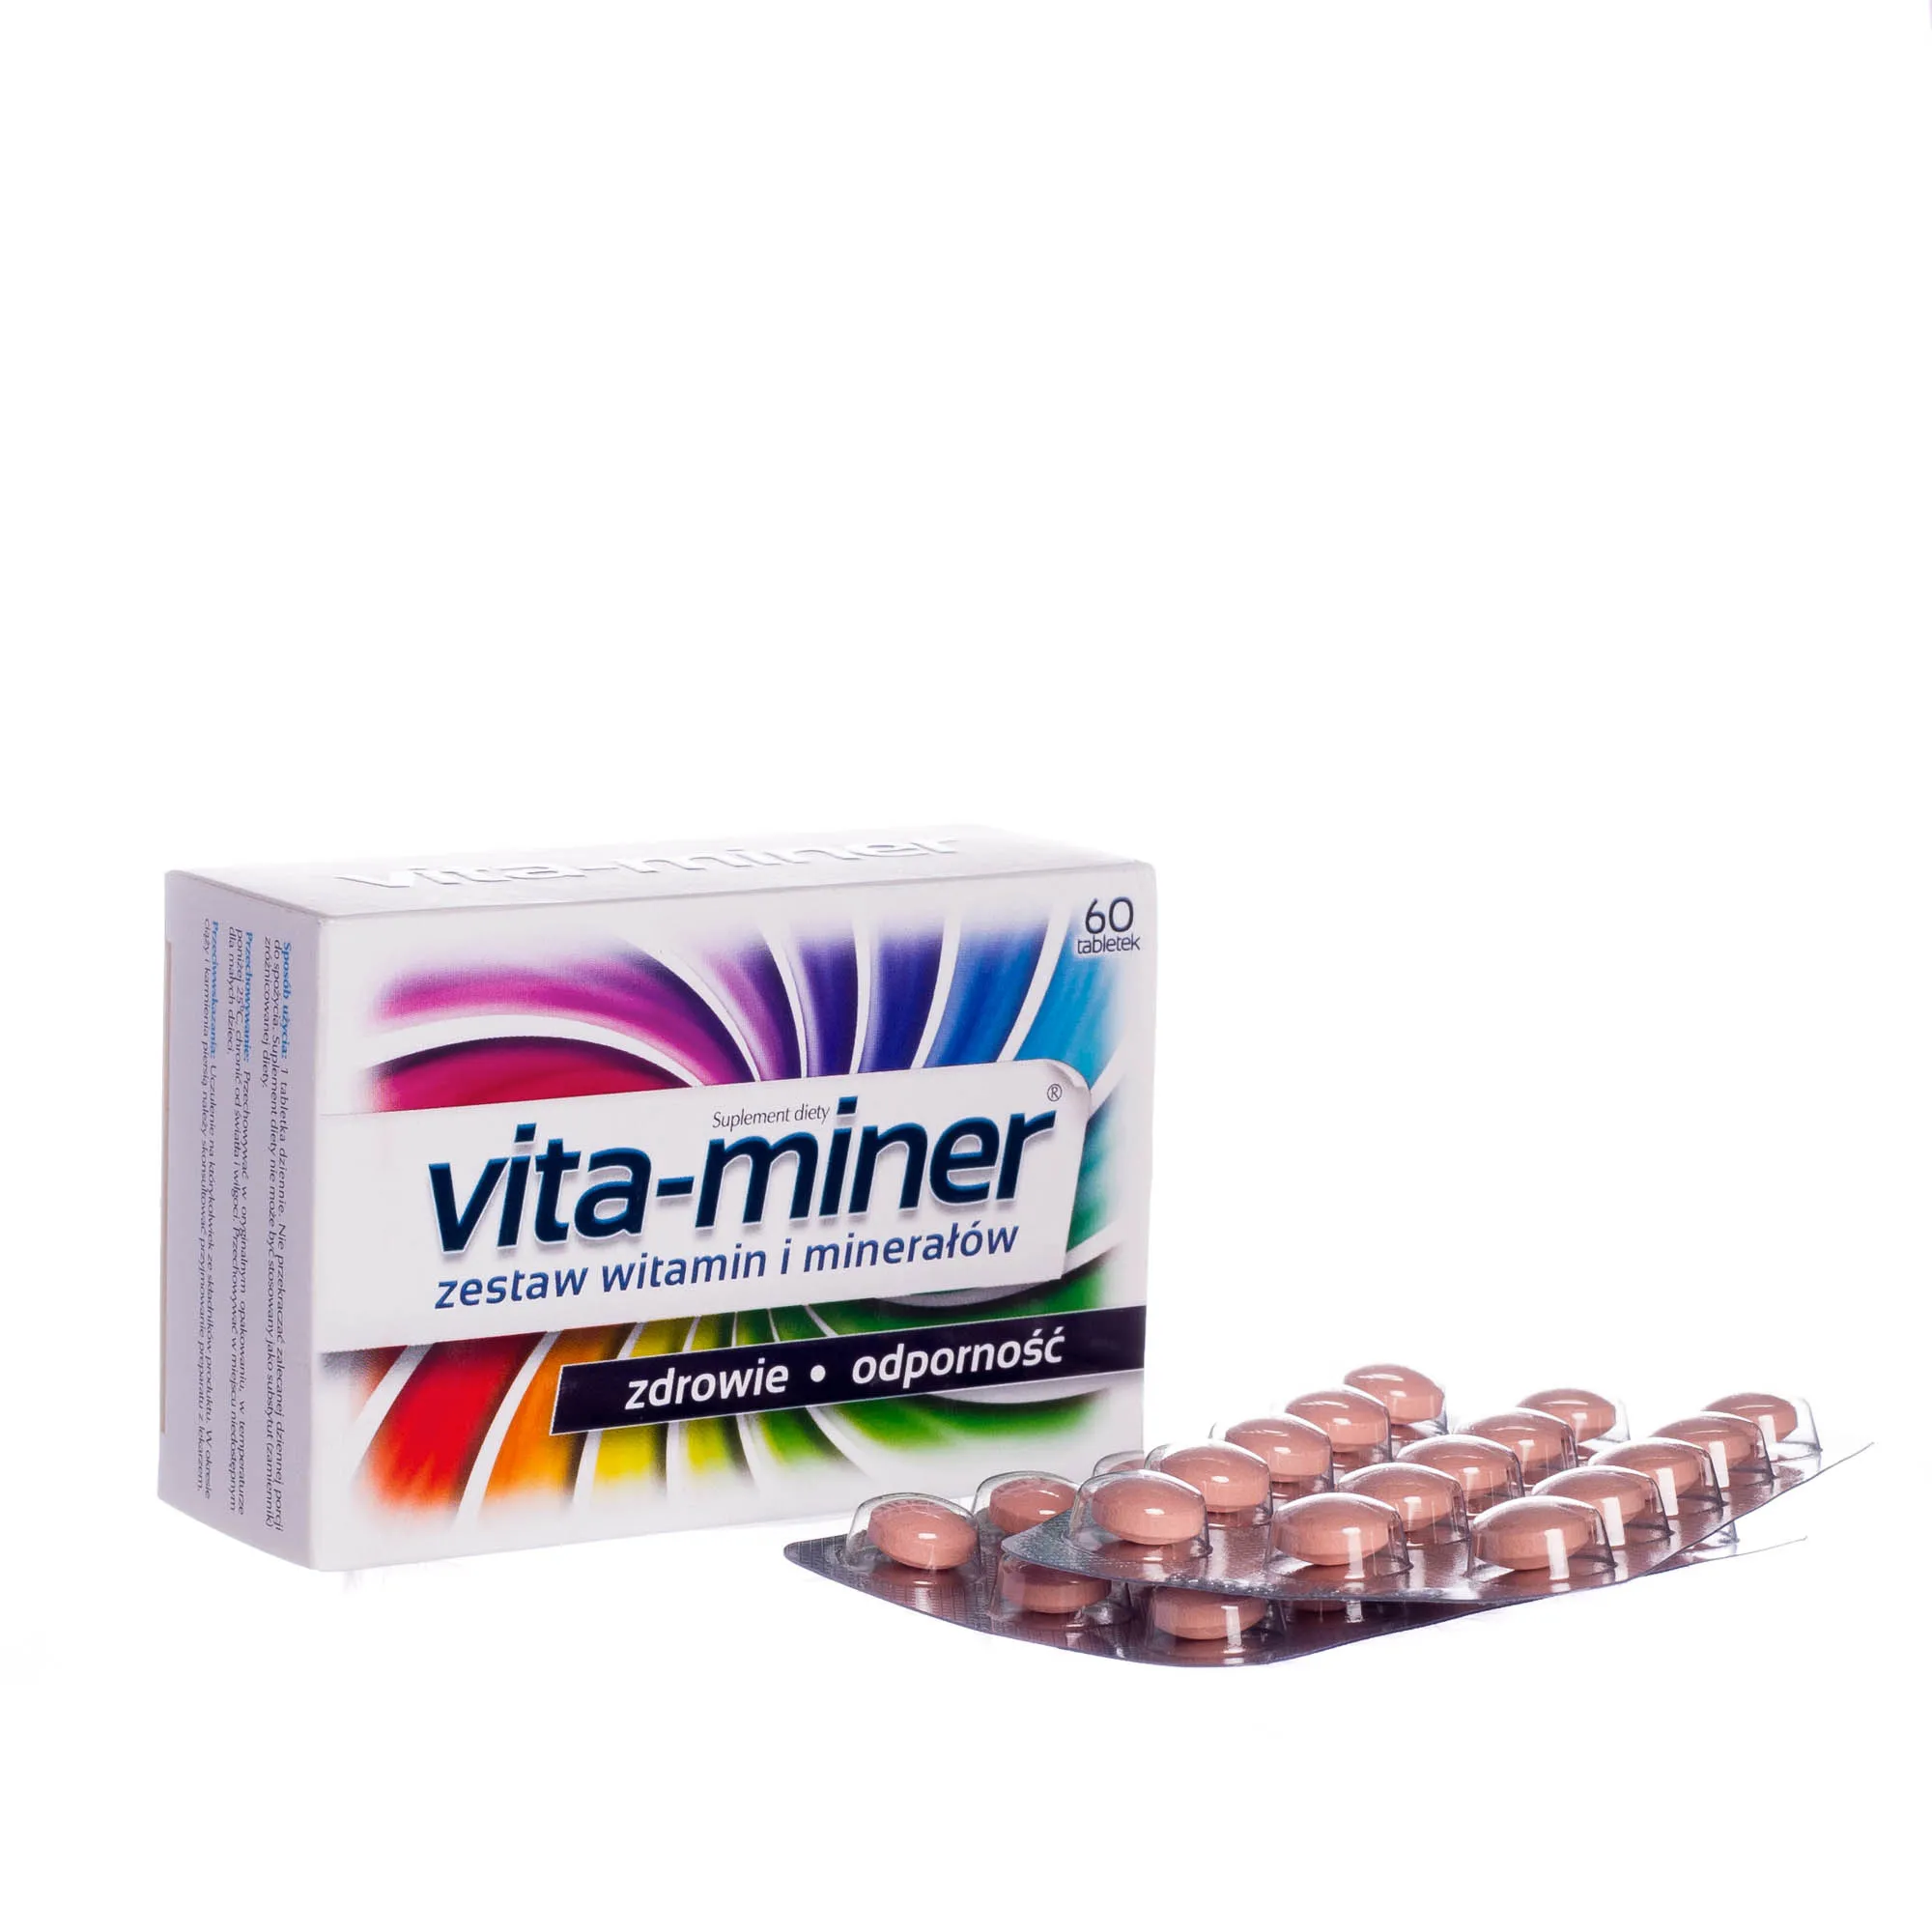 Vita-miner - suplement diety bogaty w witaminy i minerały 60 tabletek. 